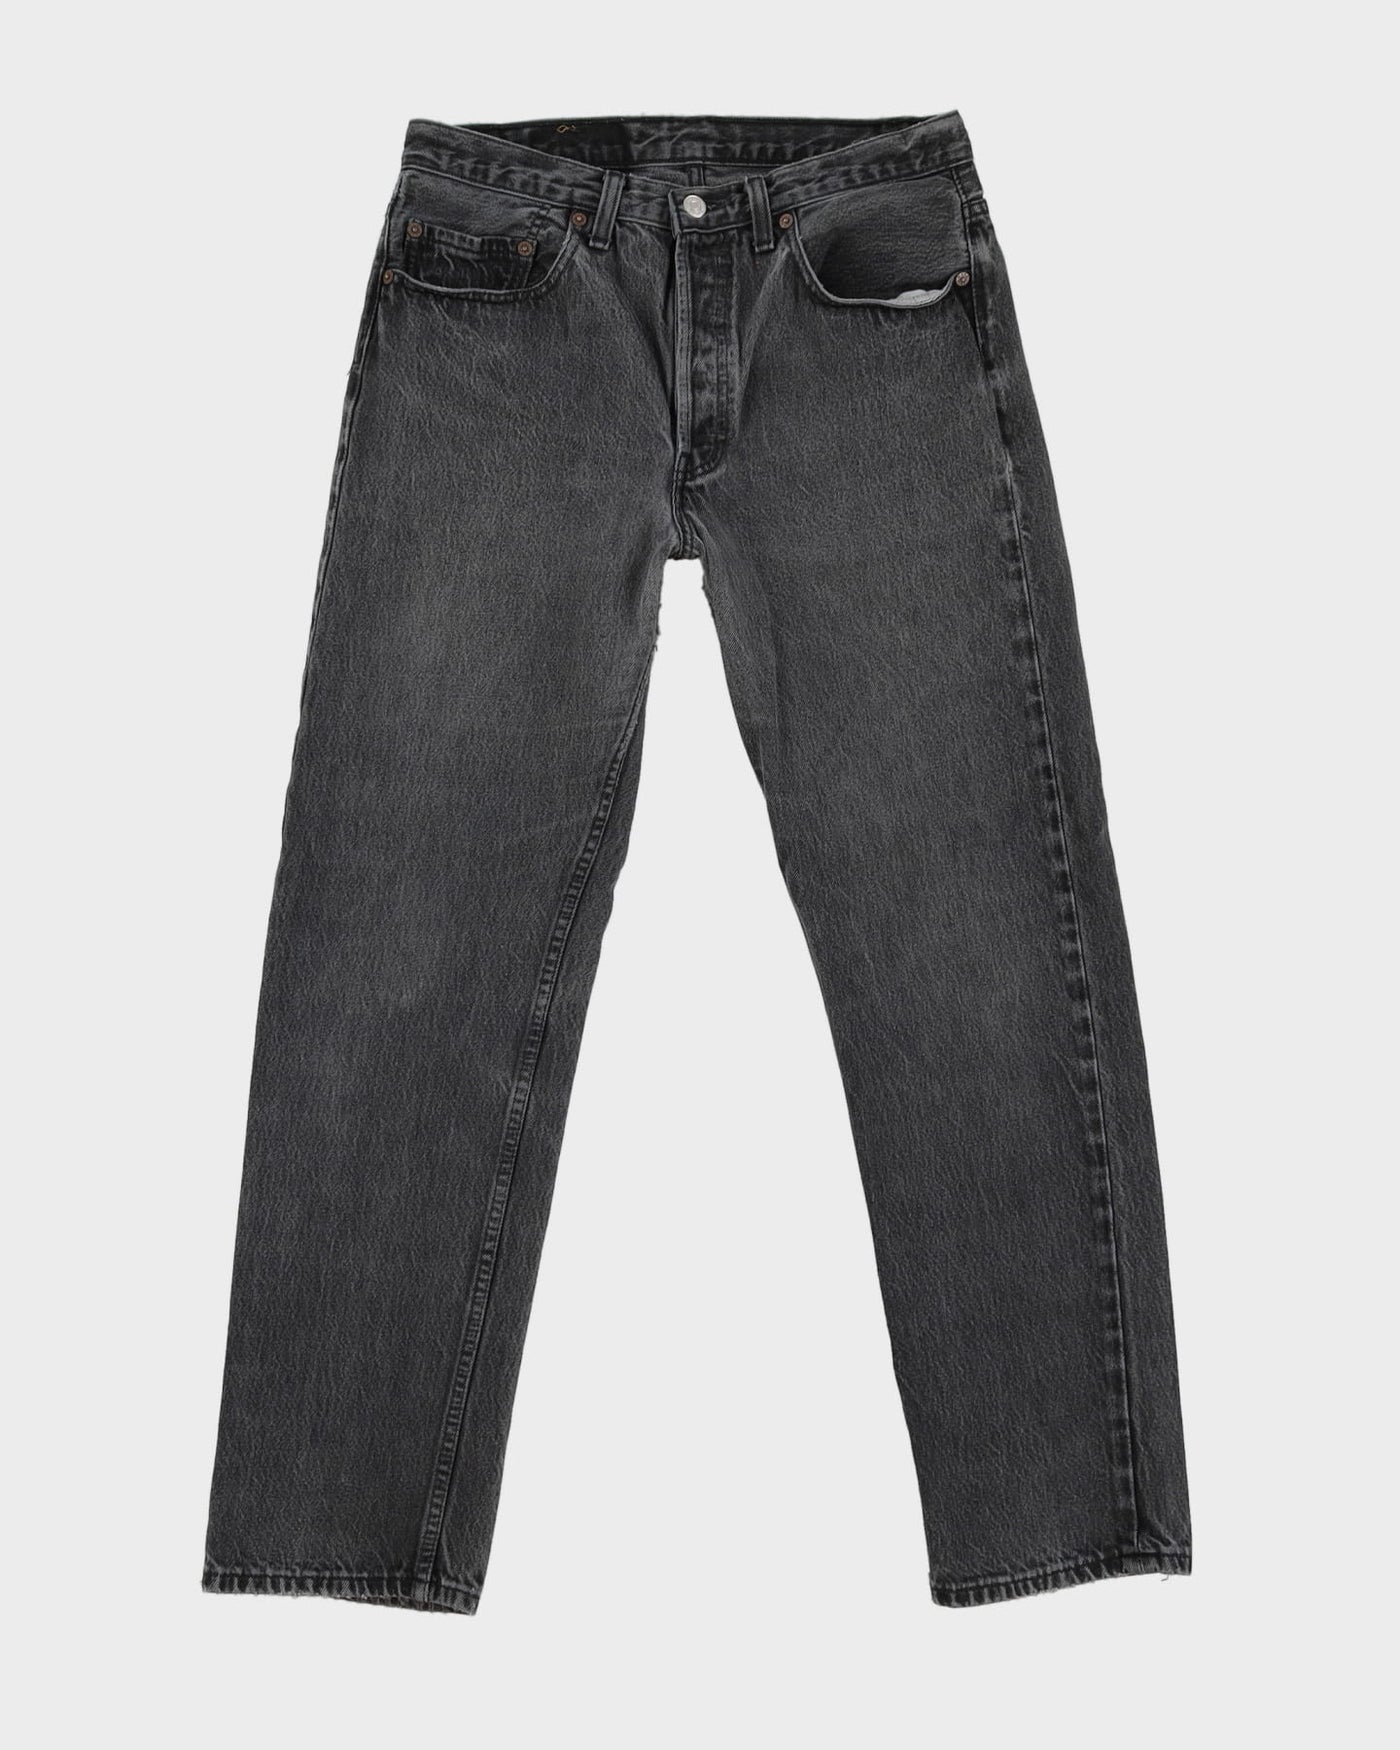 Vintage 90s Levi's 501 Dark Wash Jeans - W32 L30